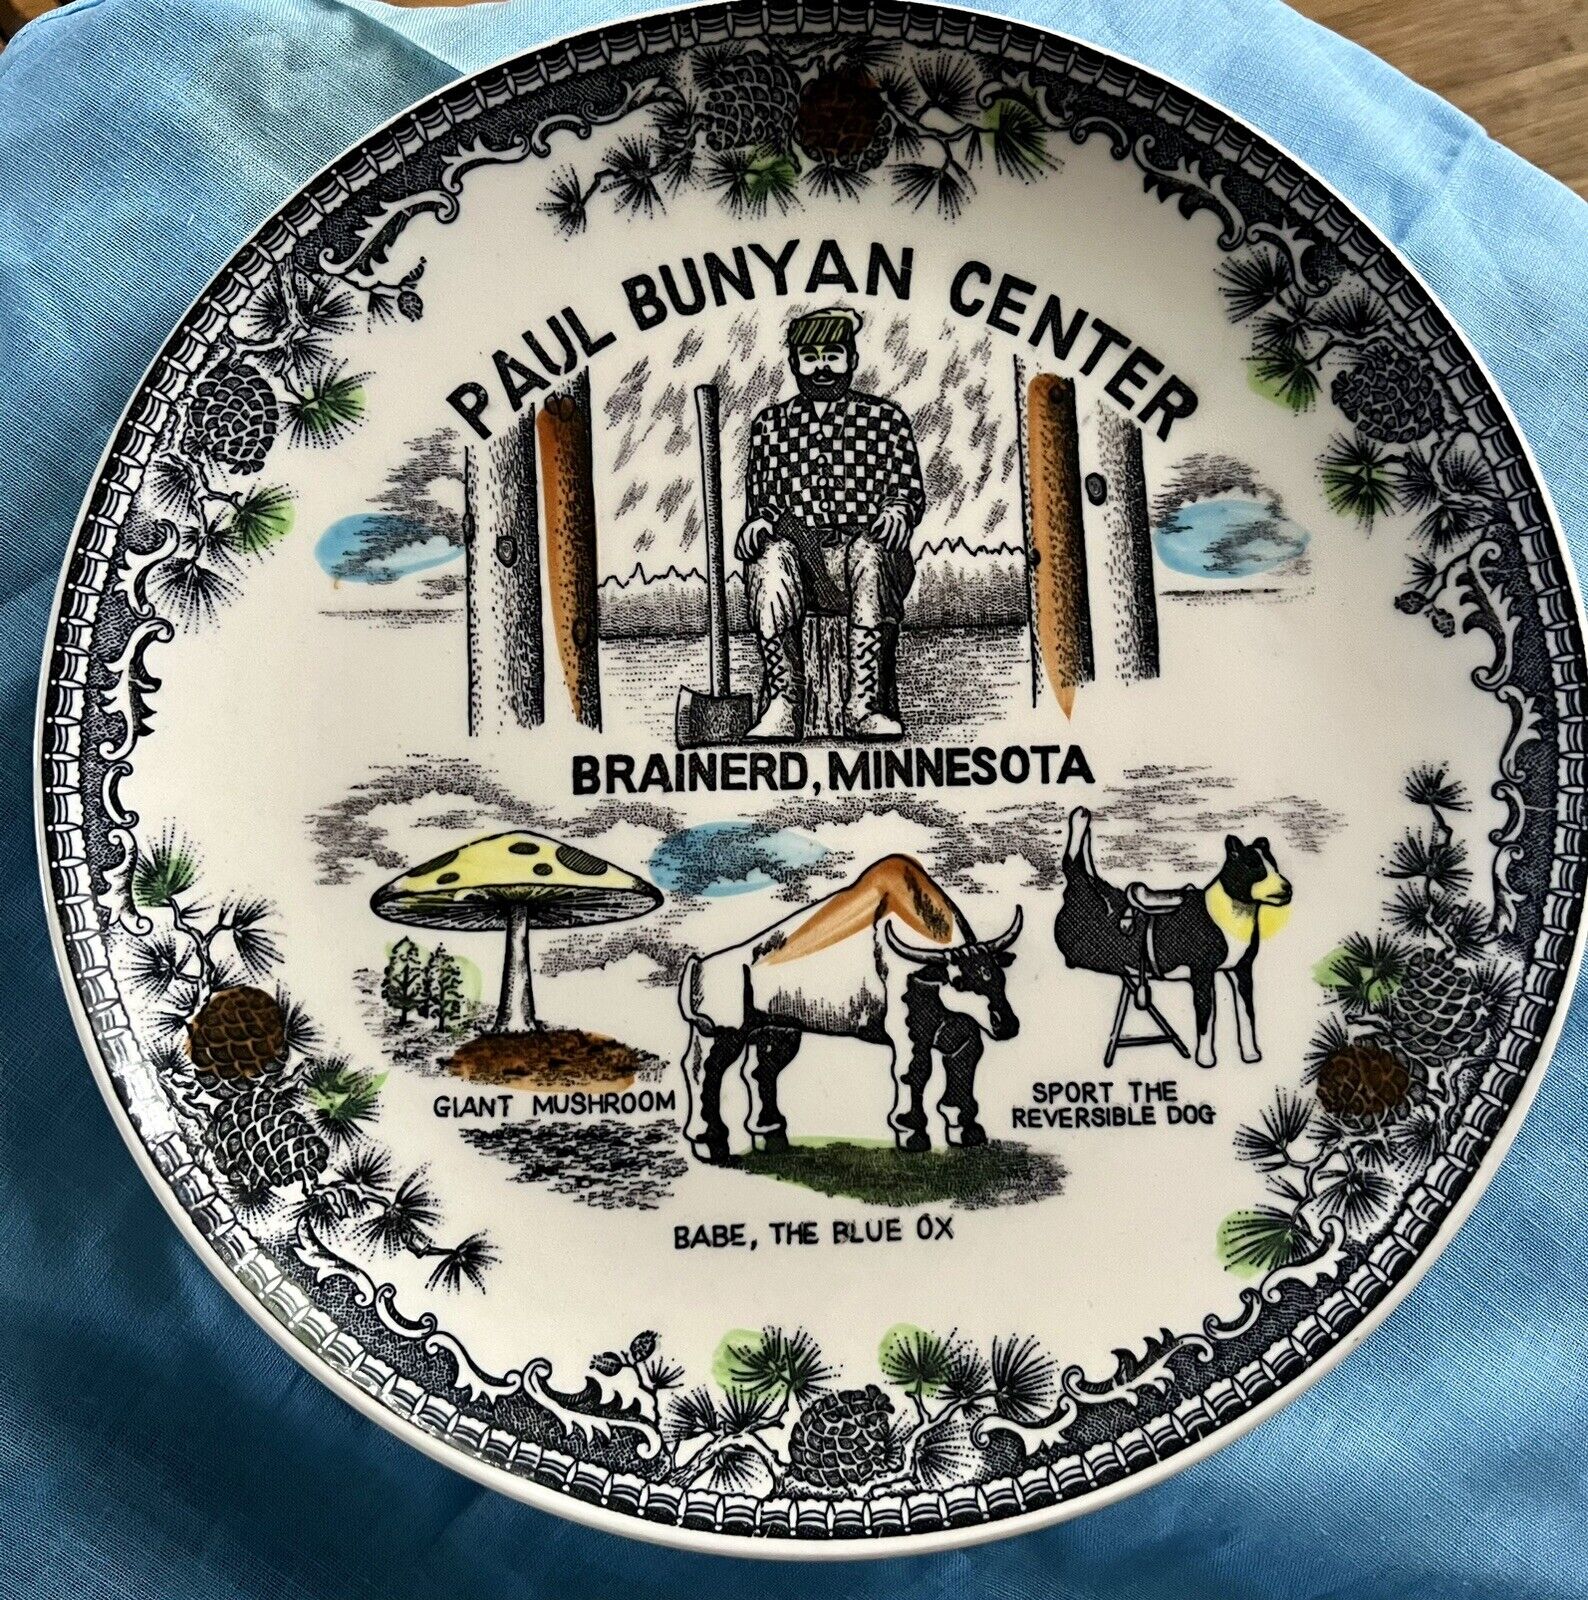 Paul Bunyan Center, Brainerd, MN Colorful Souvenir Plate